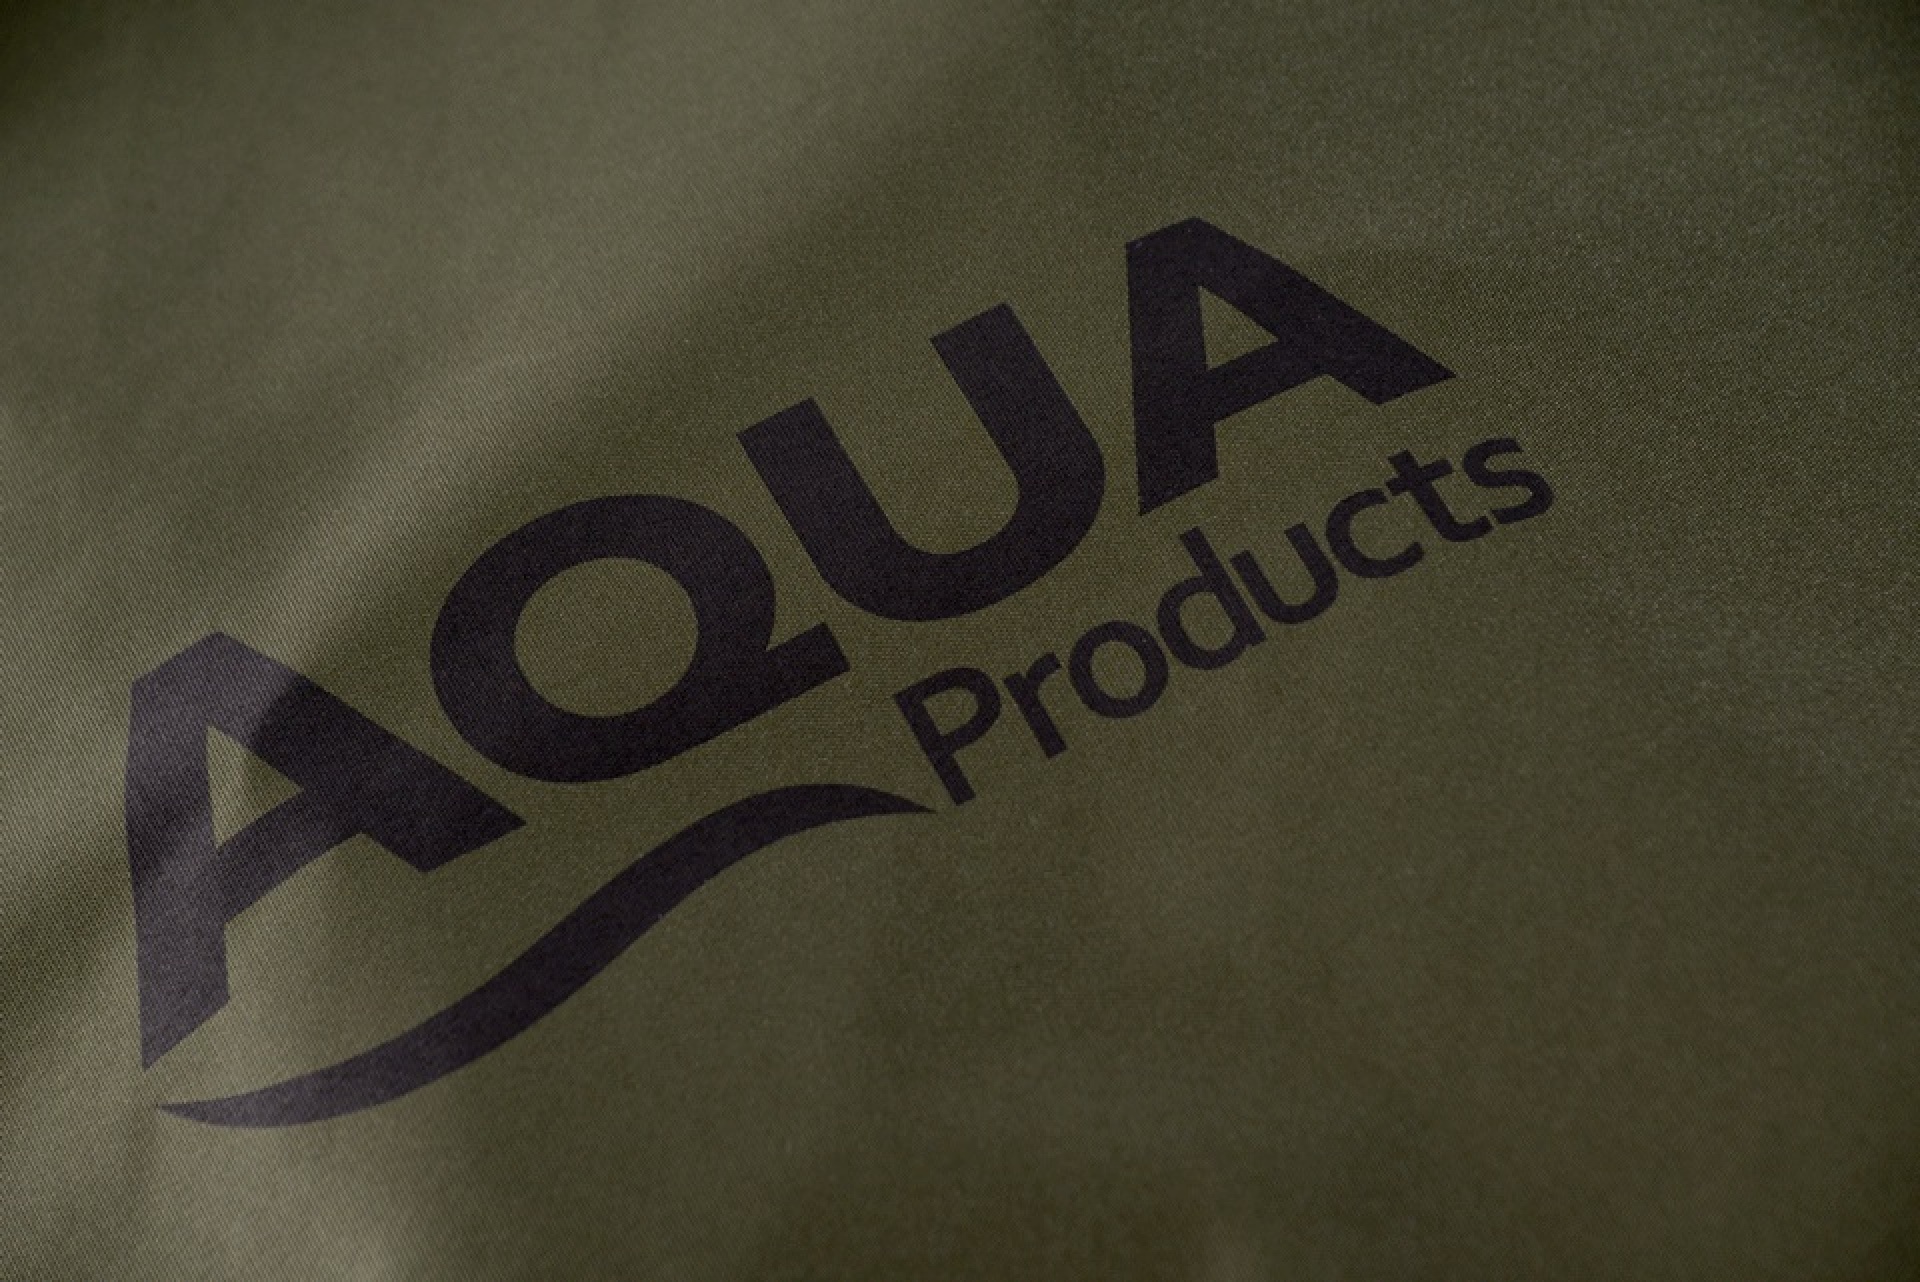 Aqua Products Deluxe Roving Rucksack Black Series